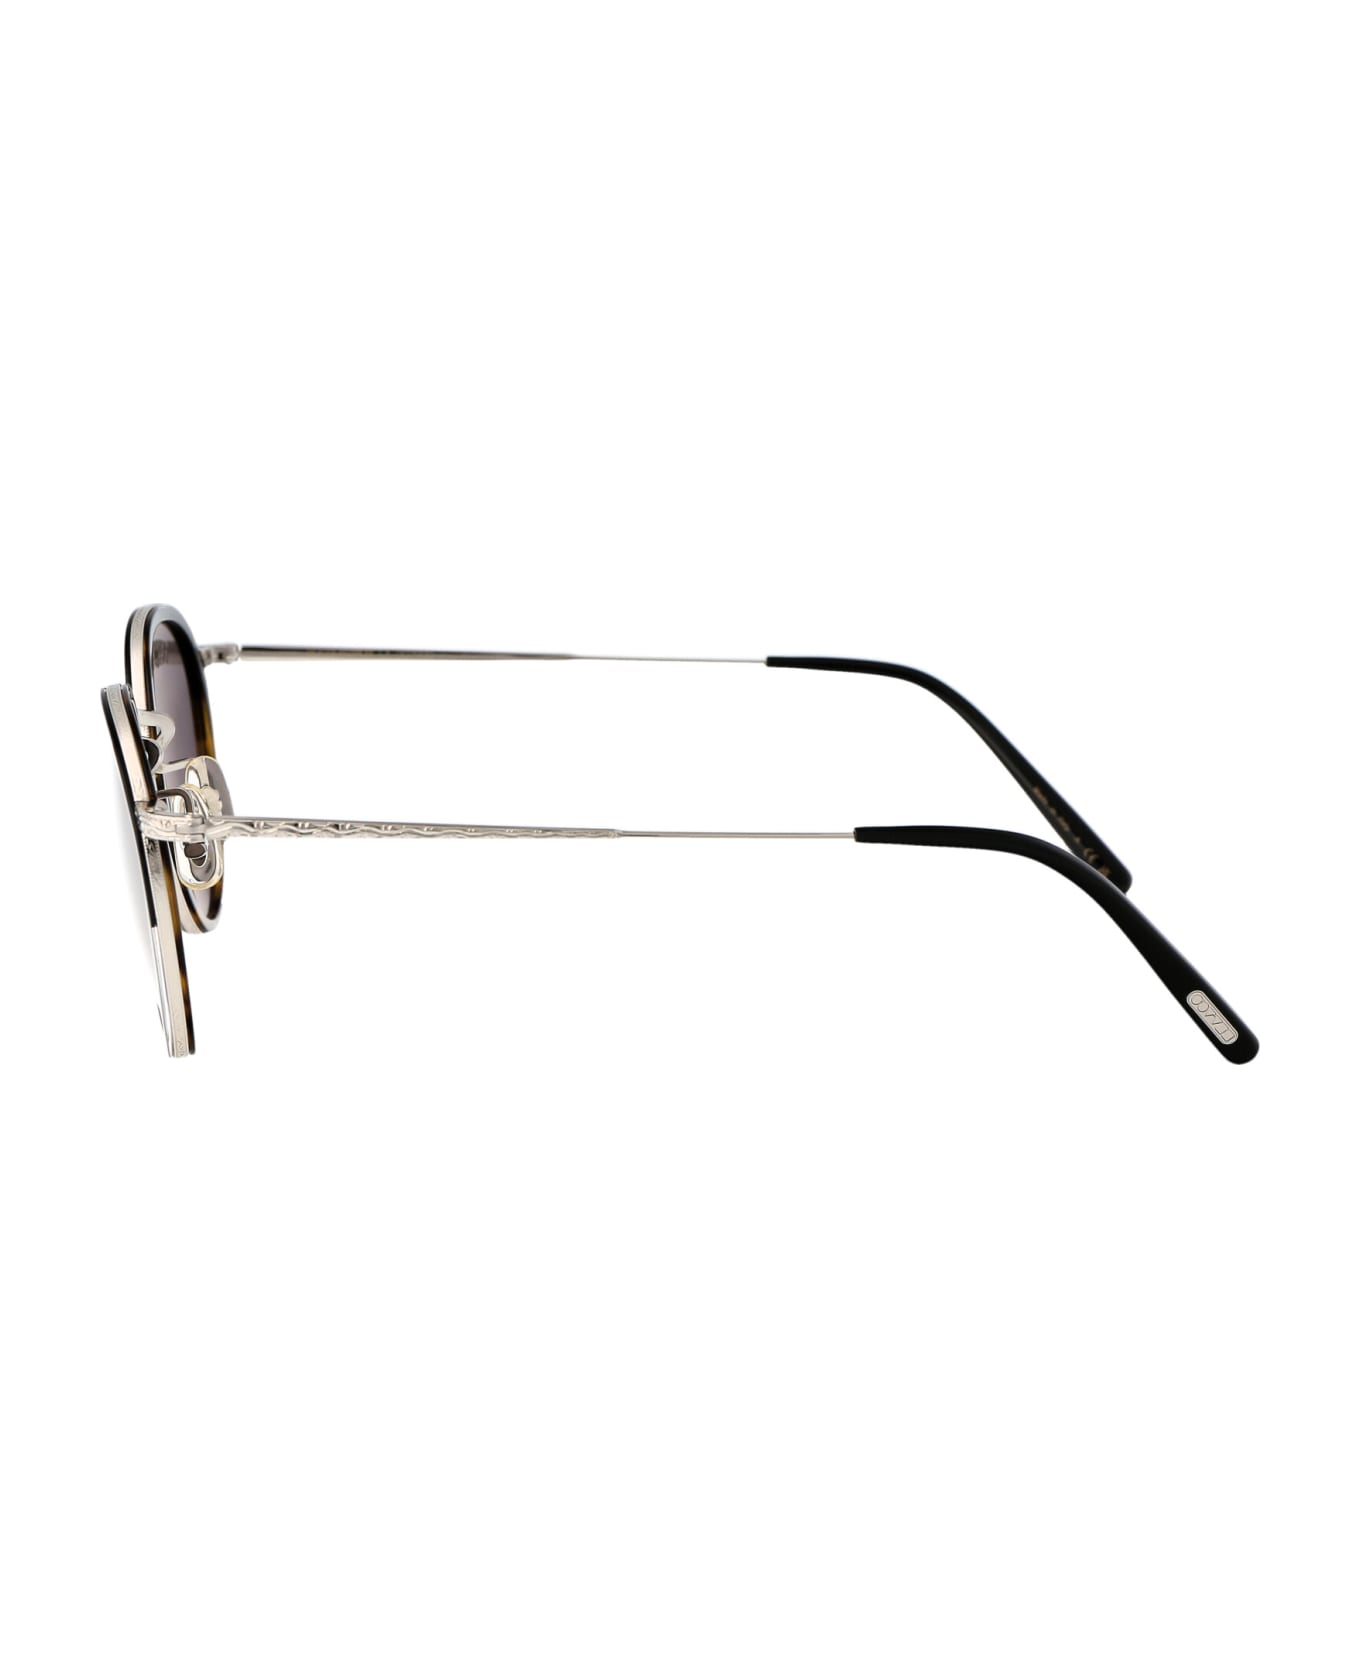 Oliver Peoples Mp-2 Sun Sunglasses - 5036R5 Black/362 Gradient/Silver